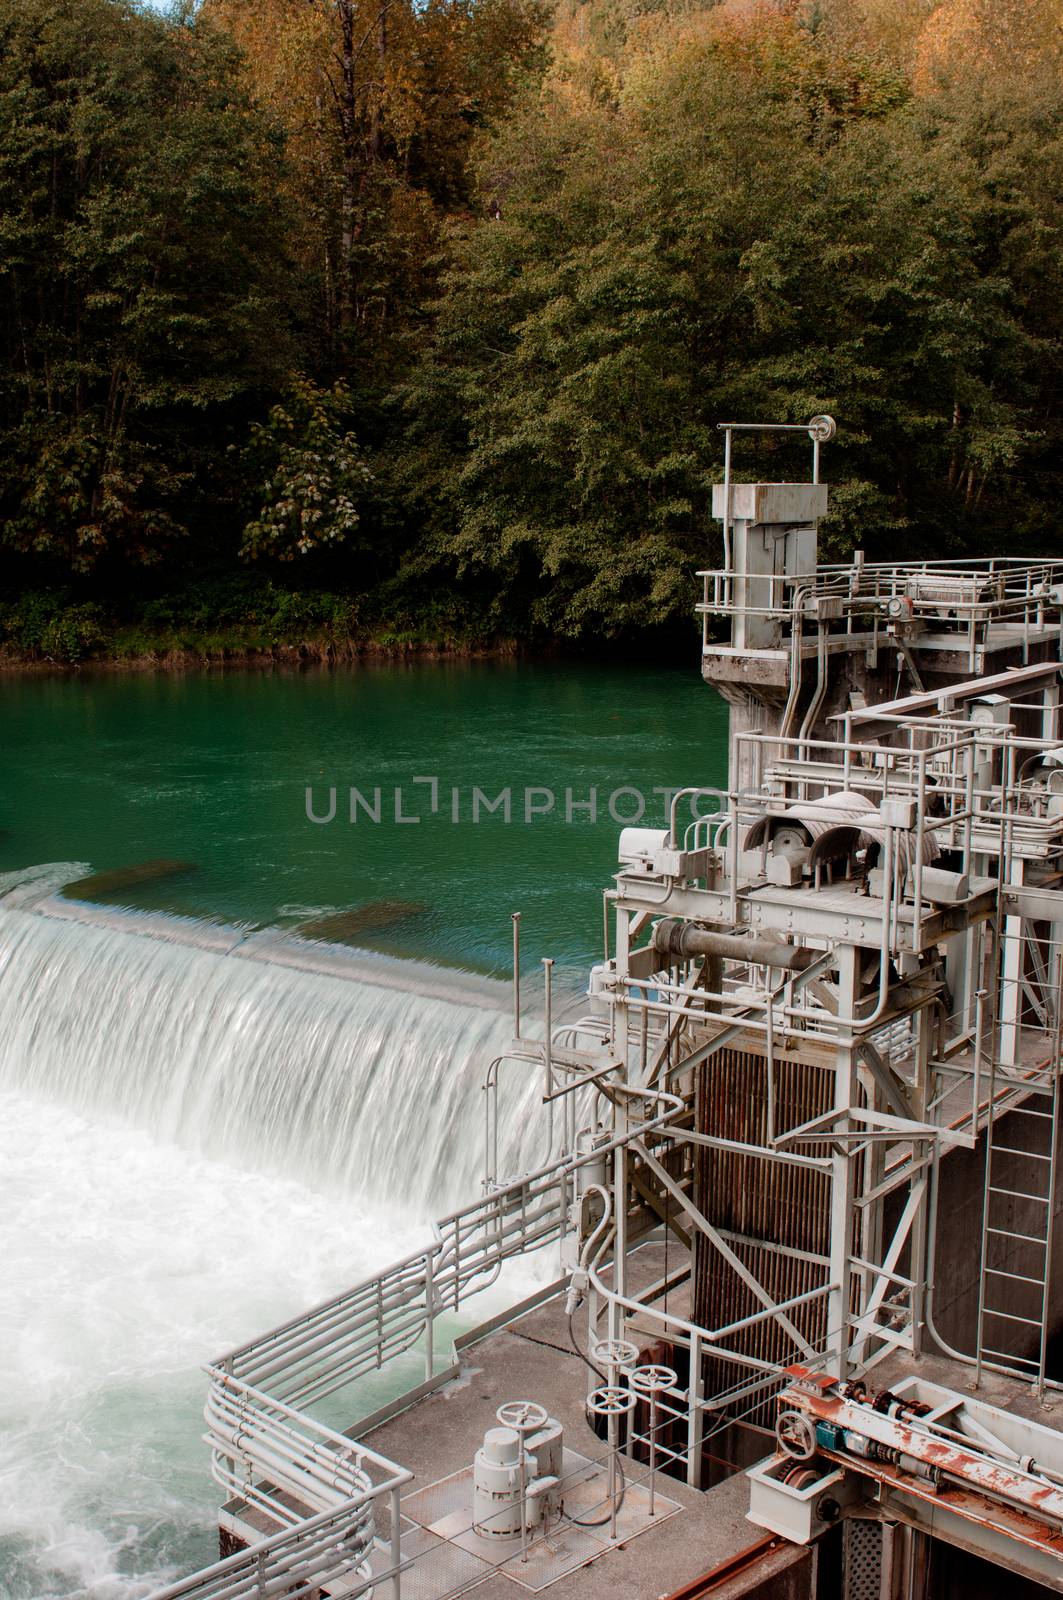 Hydropower Station in Washington State, USA by kargoo